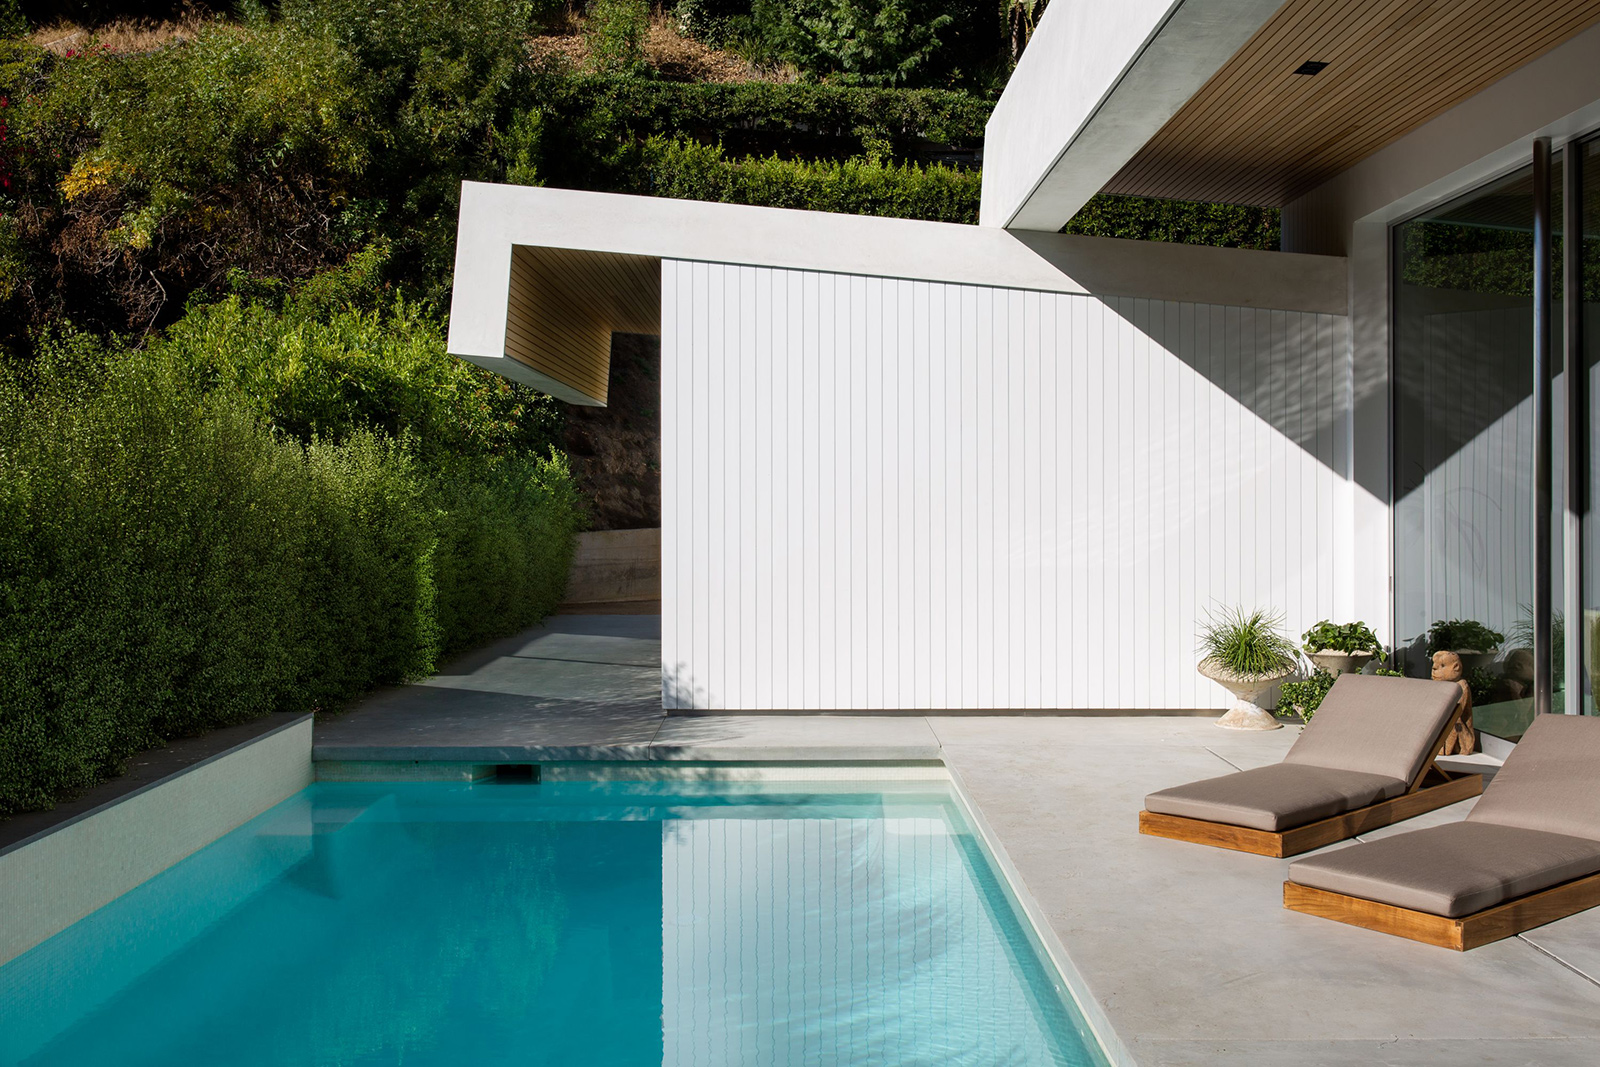 Jason Statham lists his Los Angeles midcentury home 